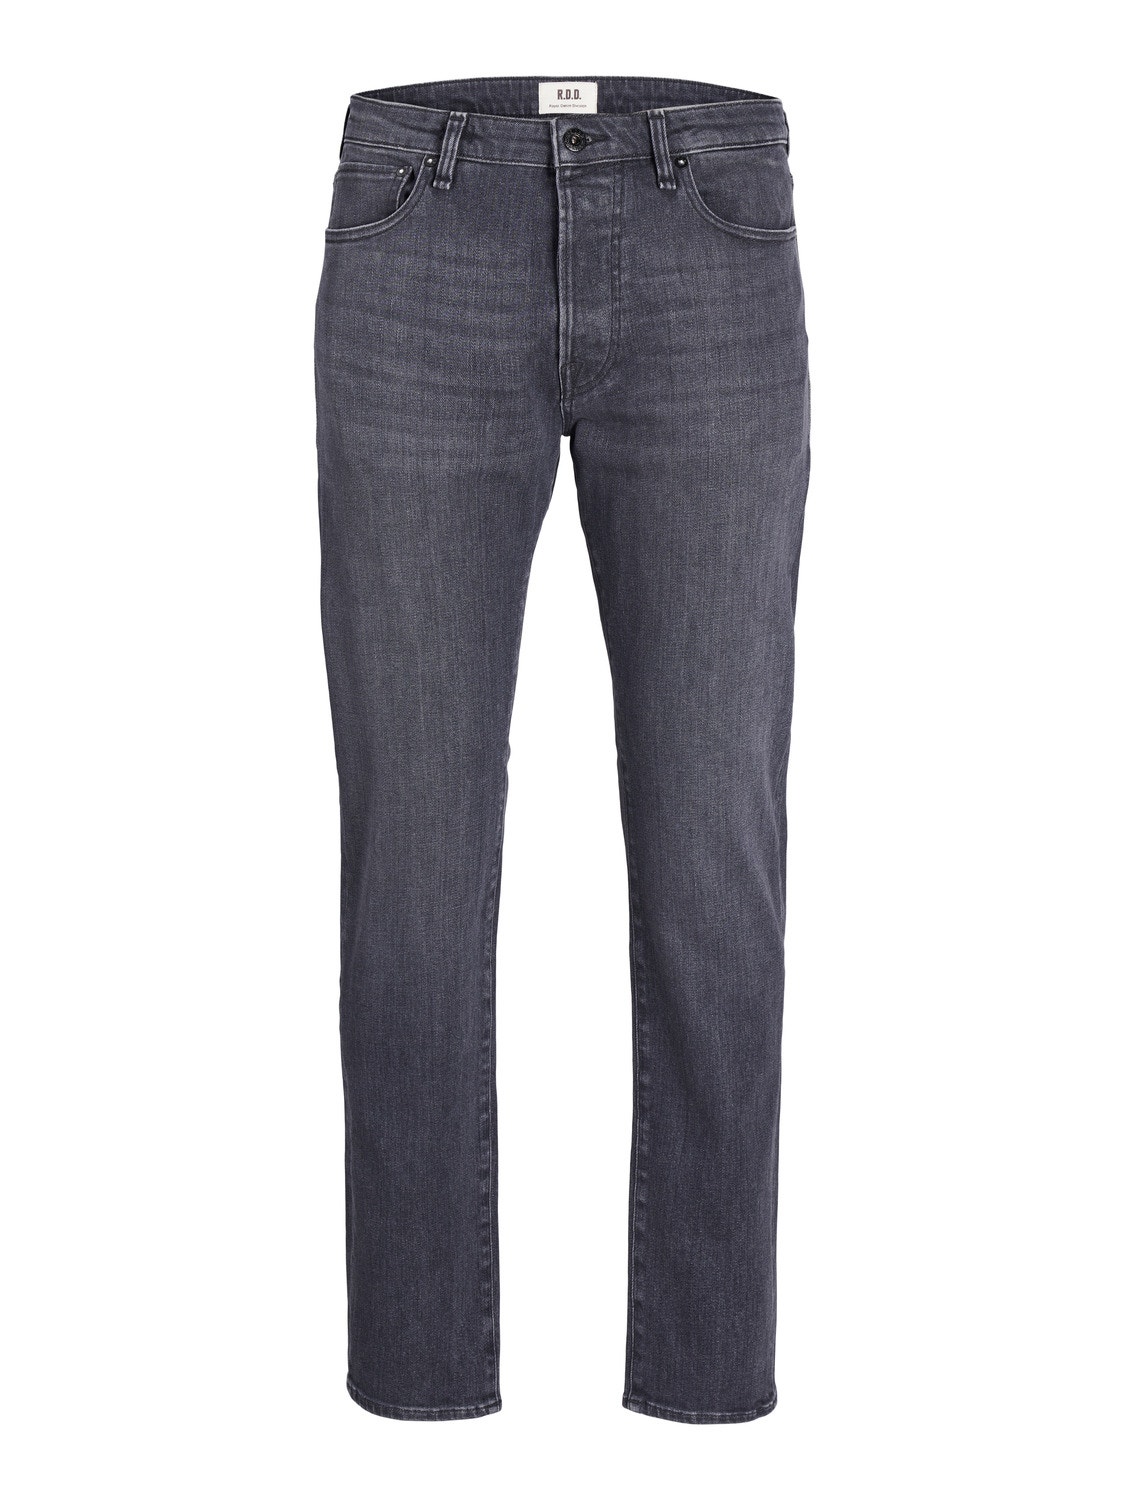 Jack & Jones RDD Royal RE 605 Comfort Fit Jeans -Grey Denim - 12218449